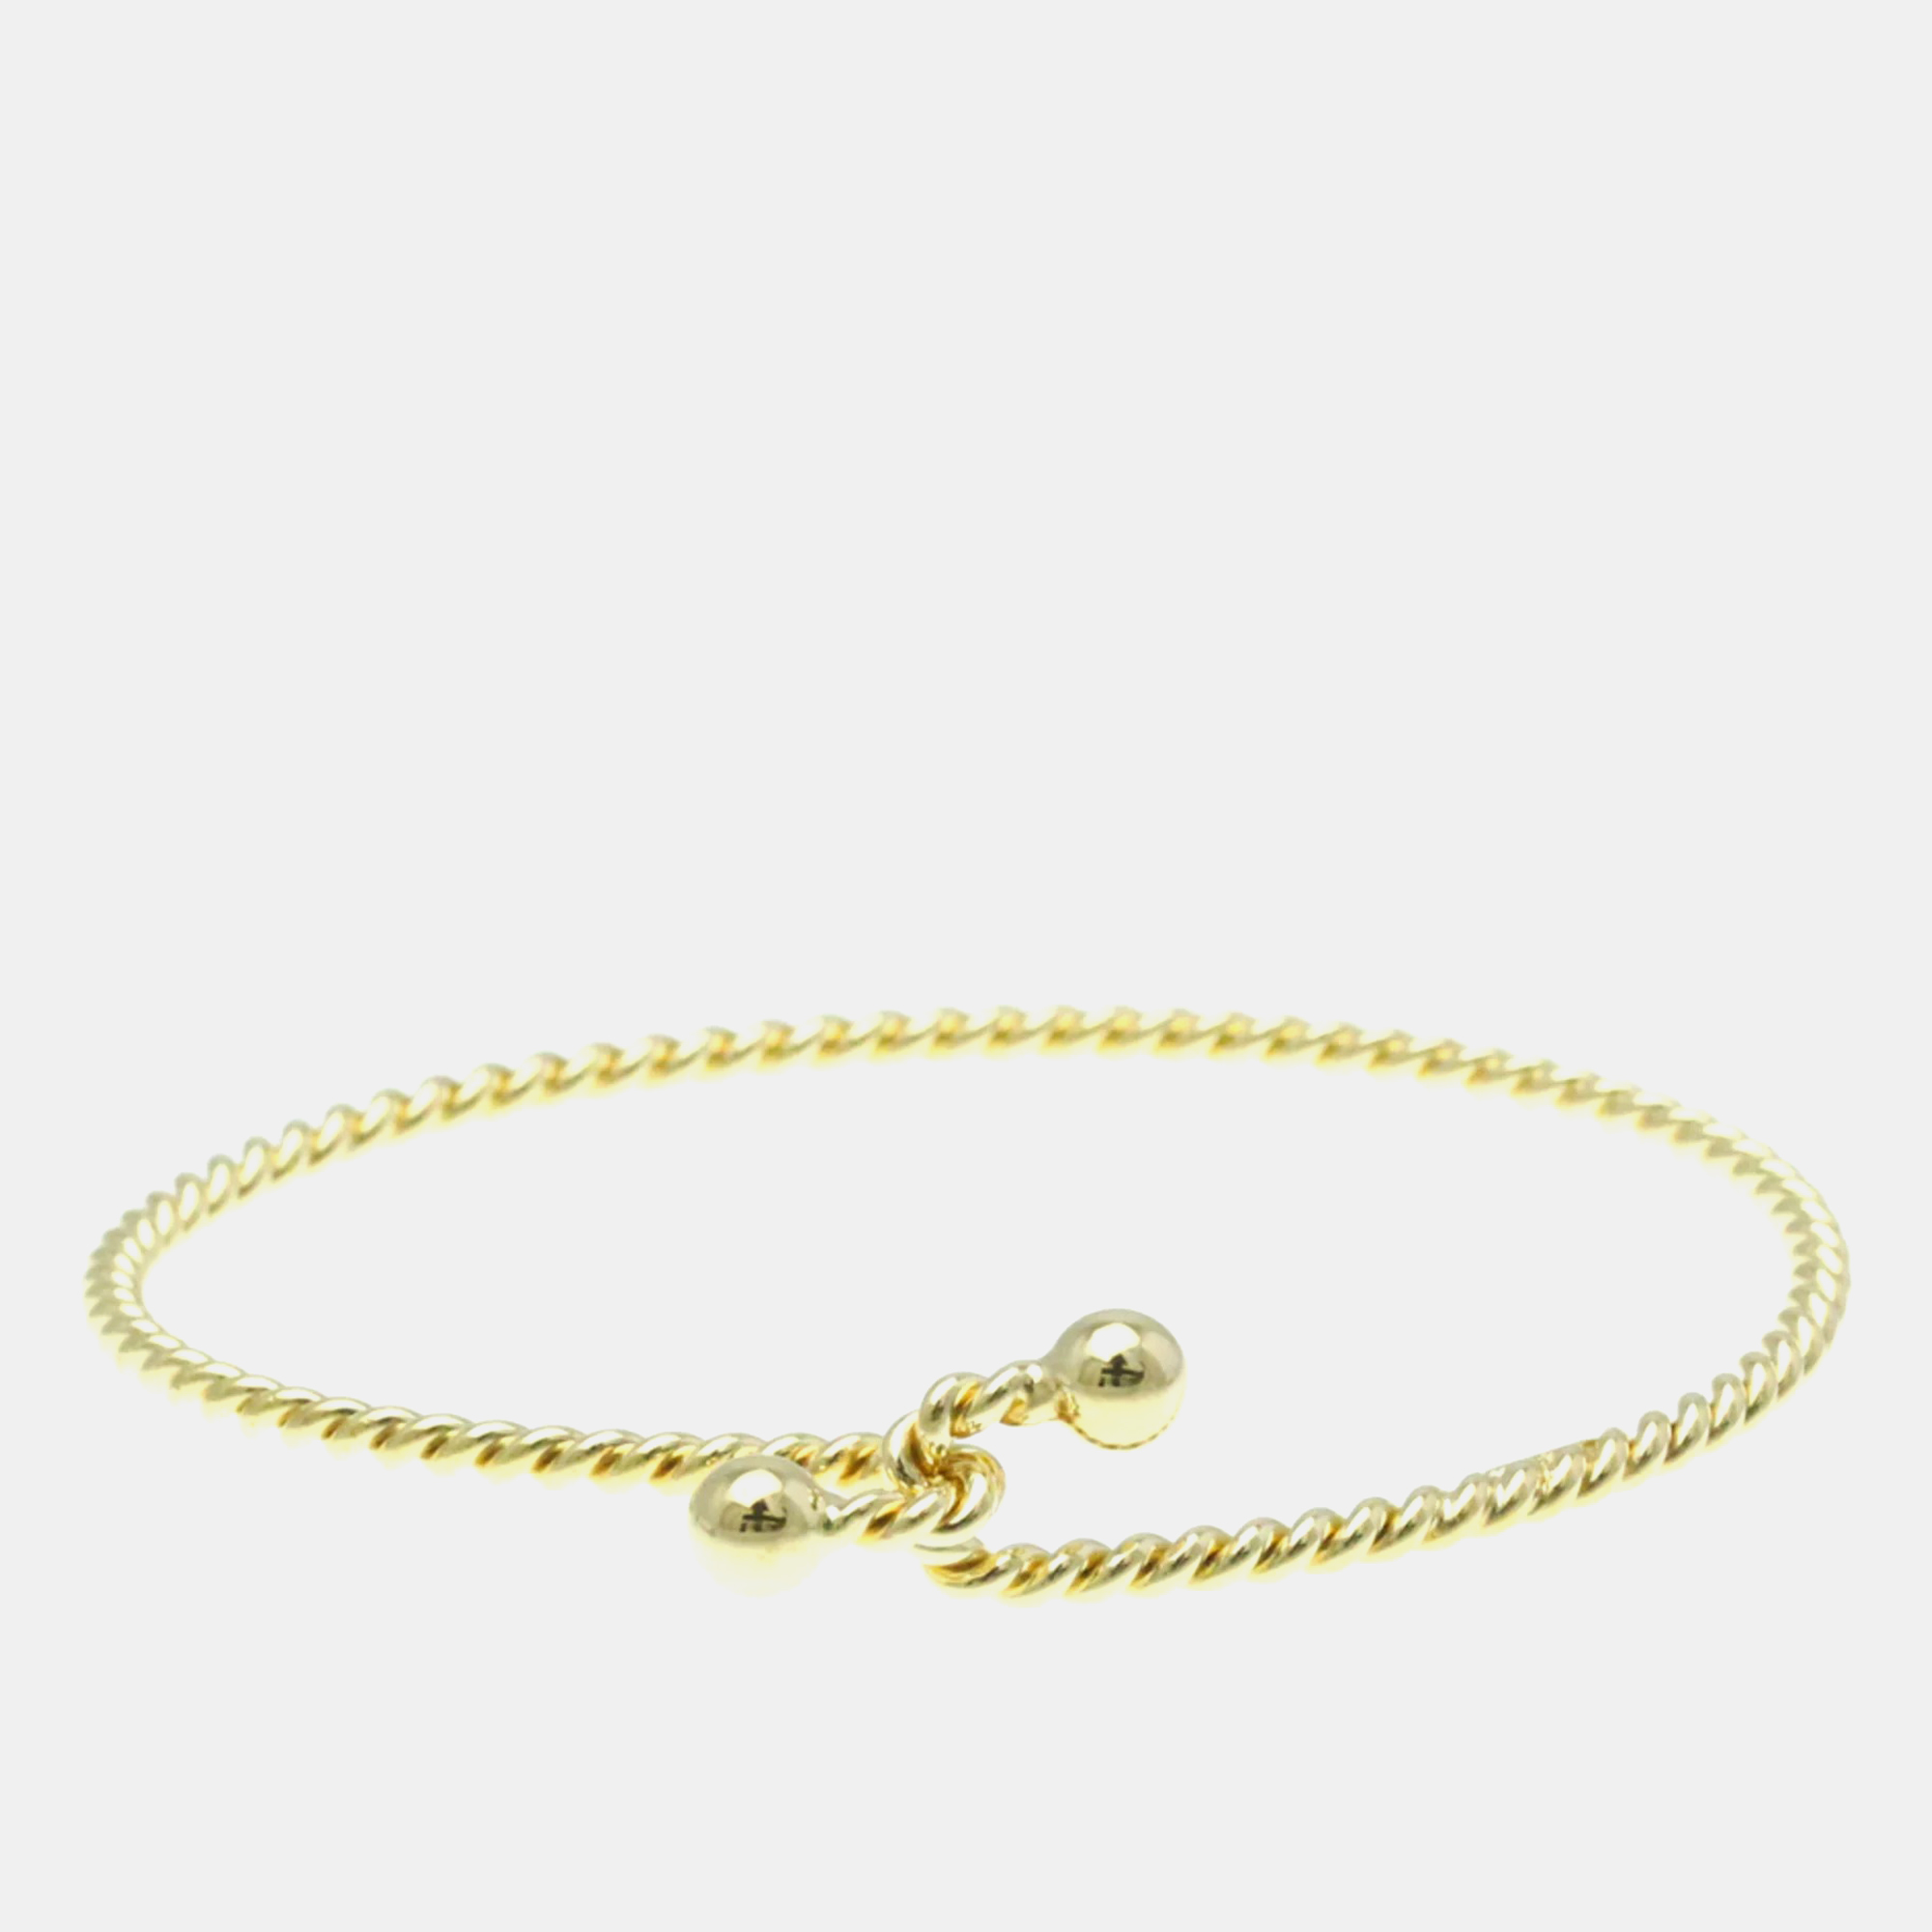 Tiffany & co. 18k yellow gold twist bangle bracelet